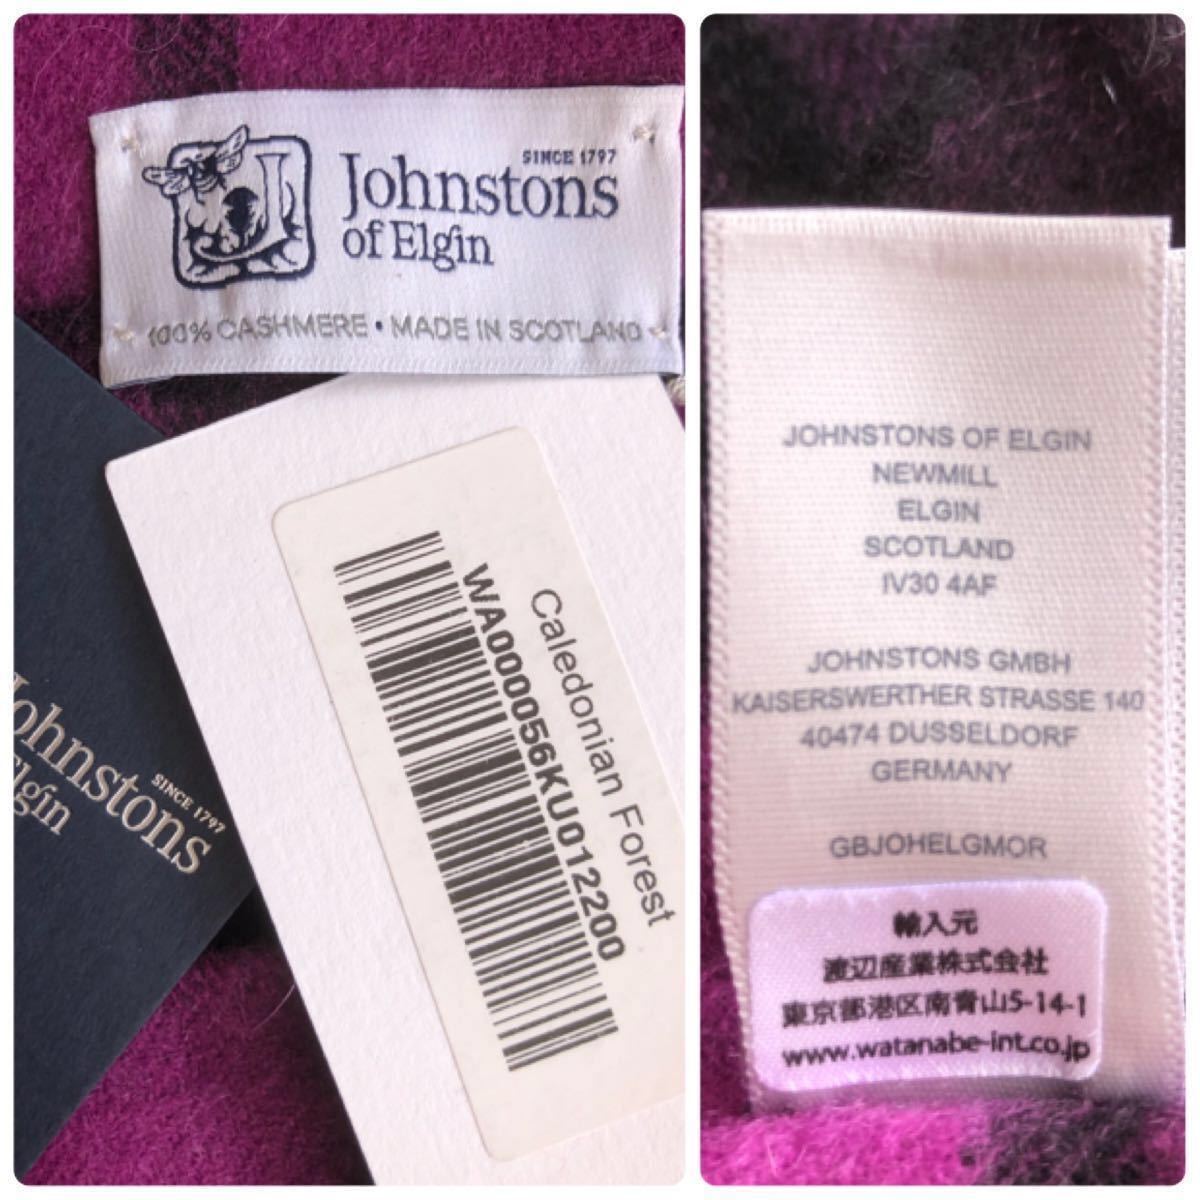  domestic regular tag attaching * John stone z rare color stole new goods pink & purple tartan check 